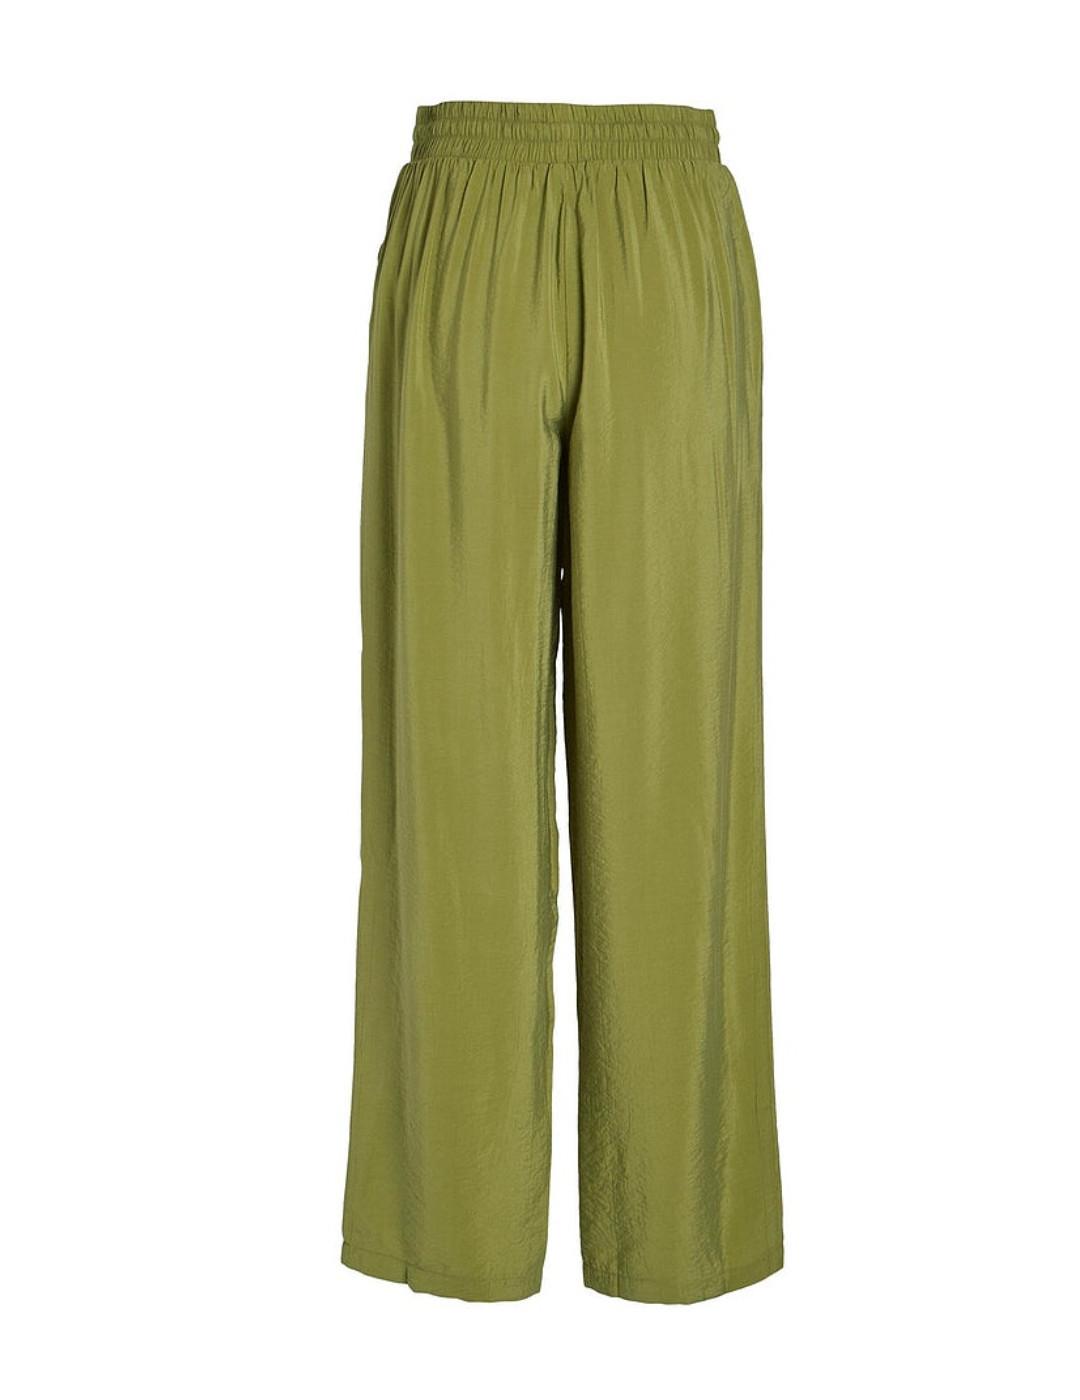 Pantalon Vila Jana verde brillante para mujer